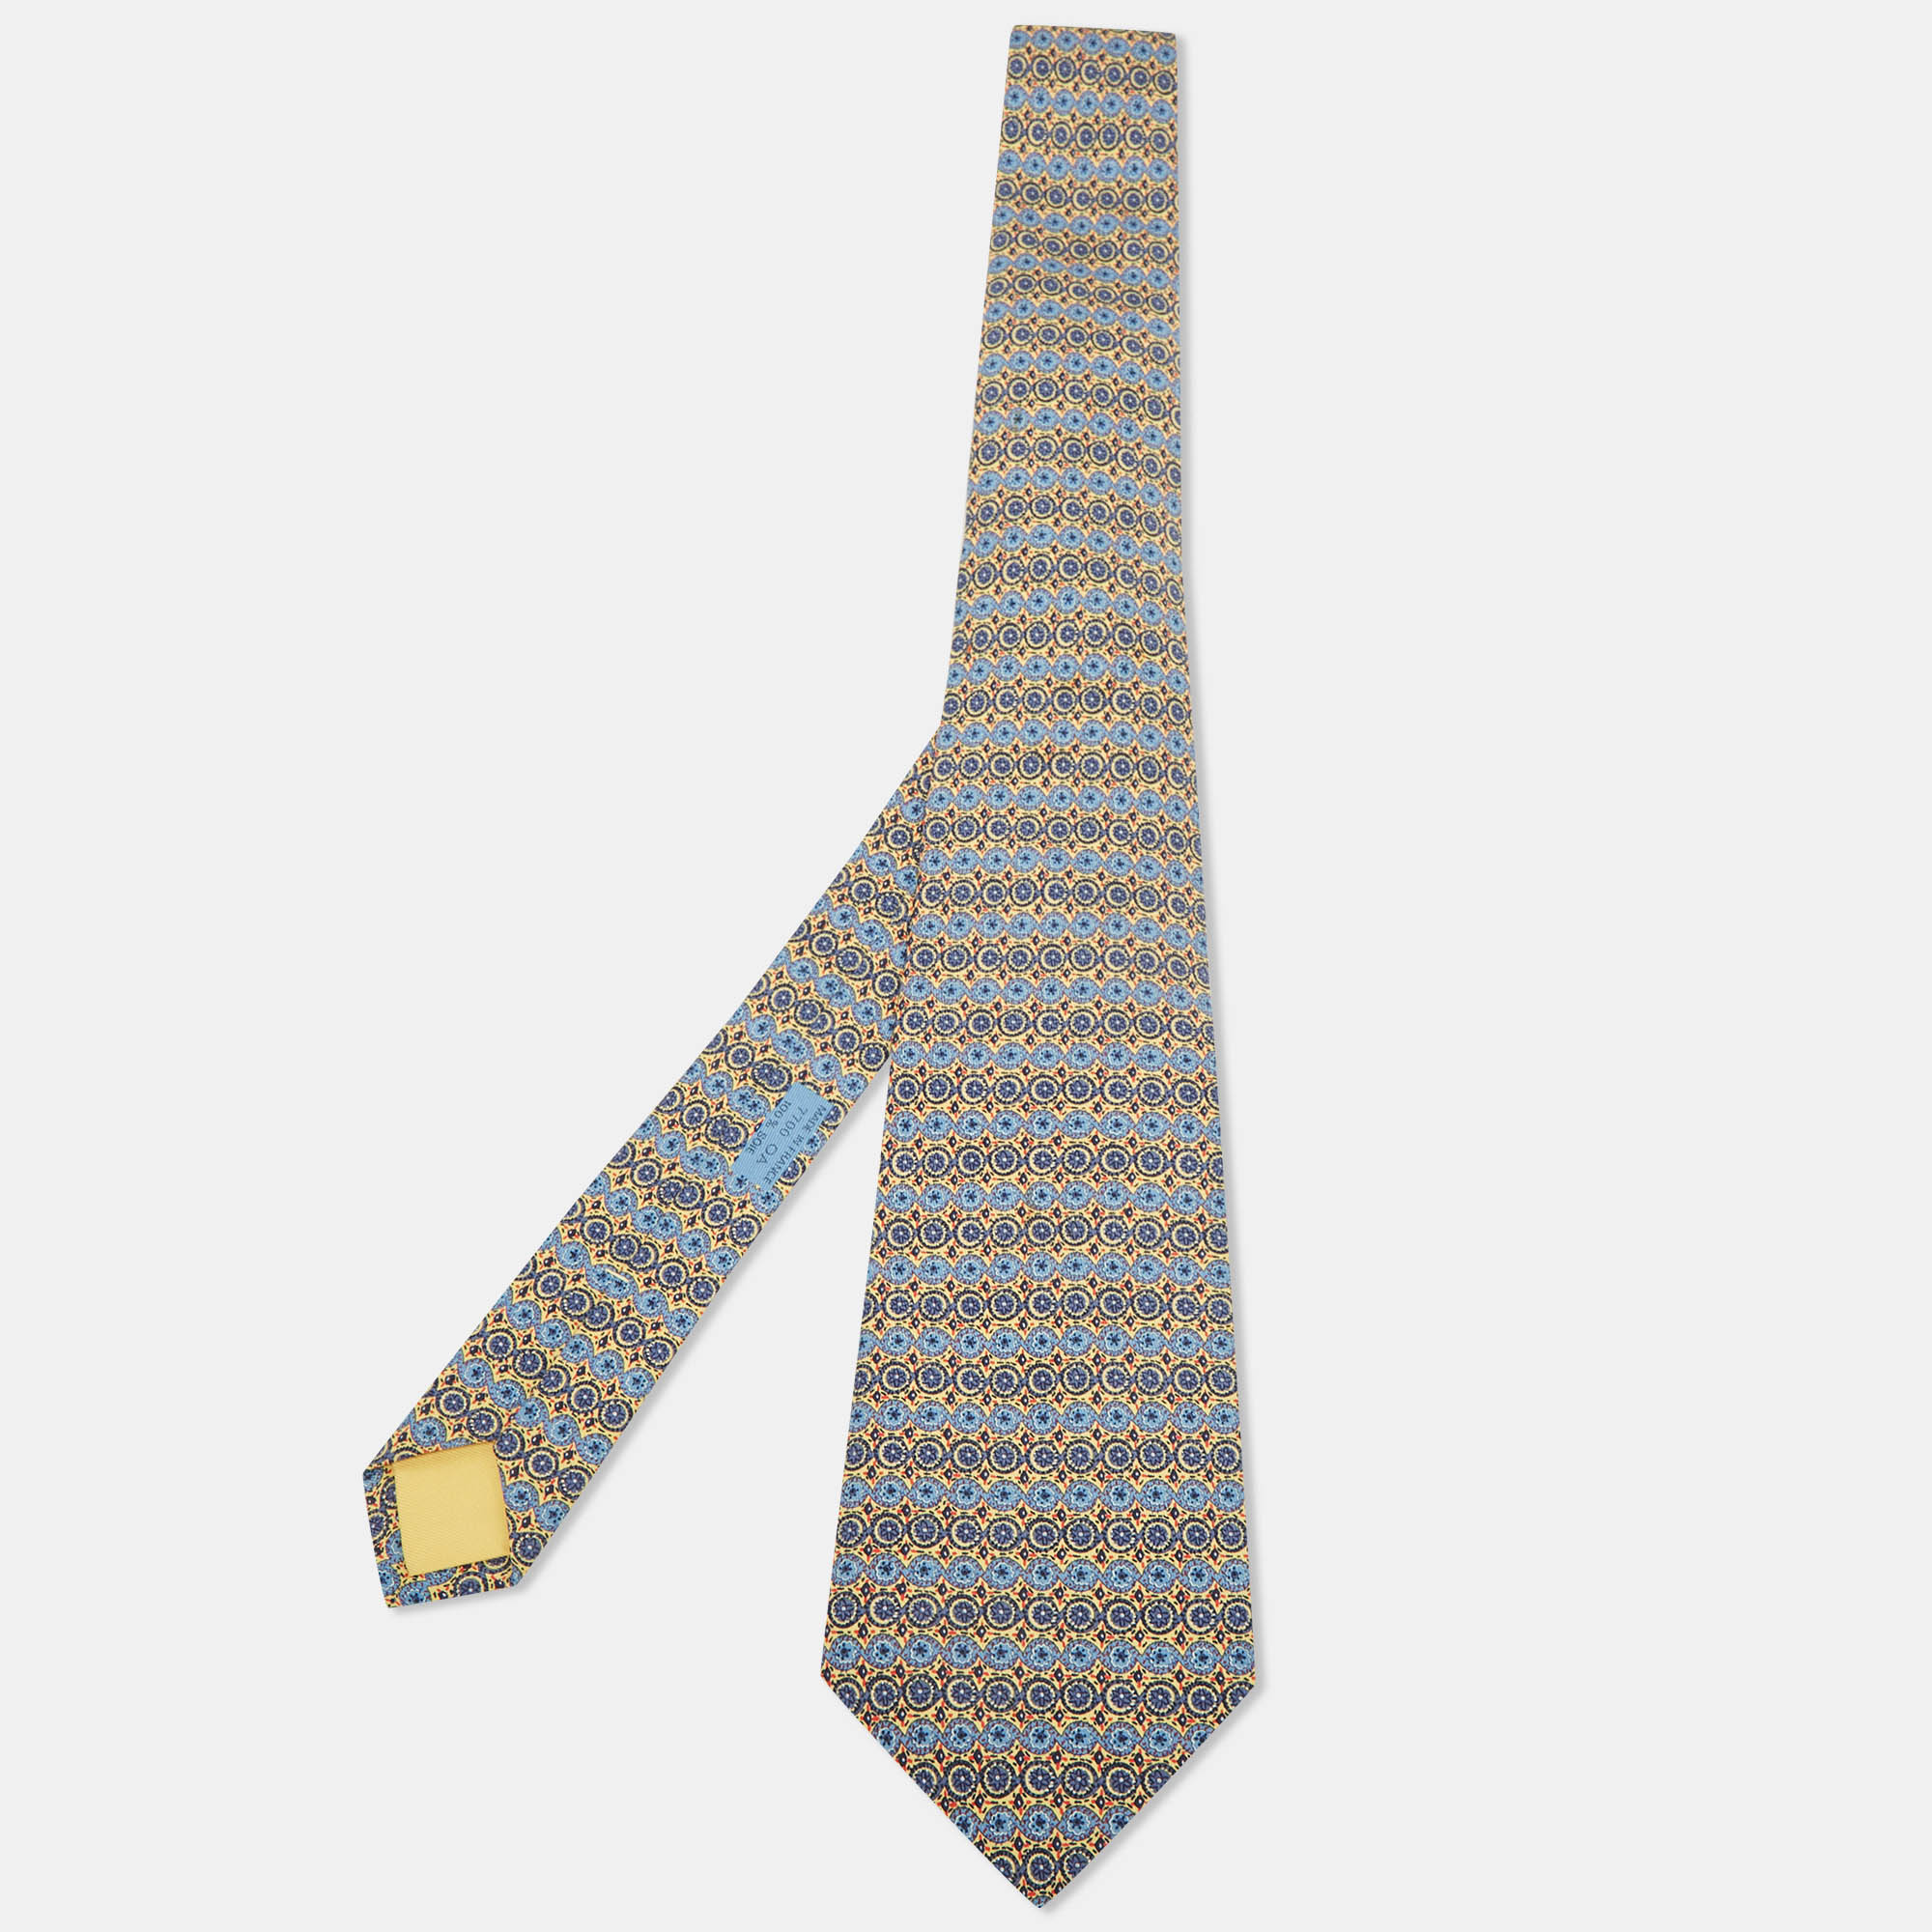 Hermes herm&egrave;s multicolor printed silk tie